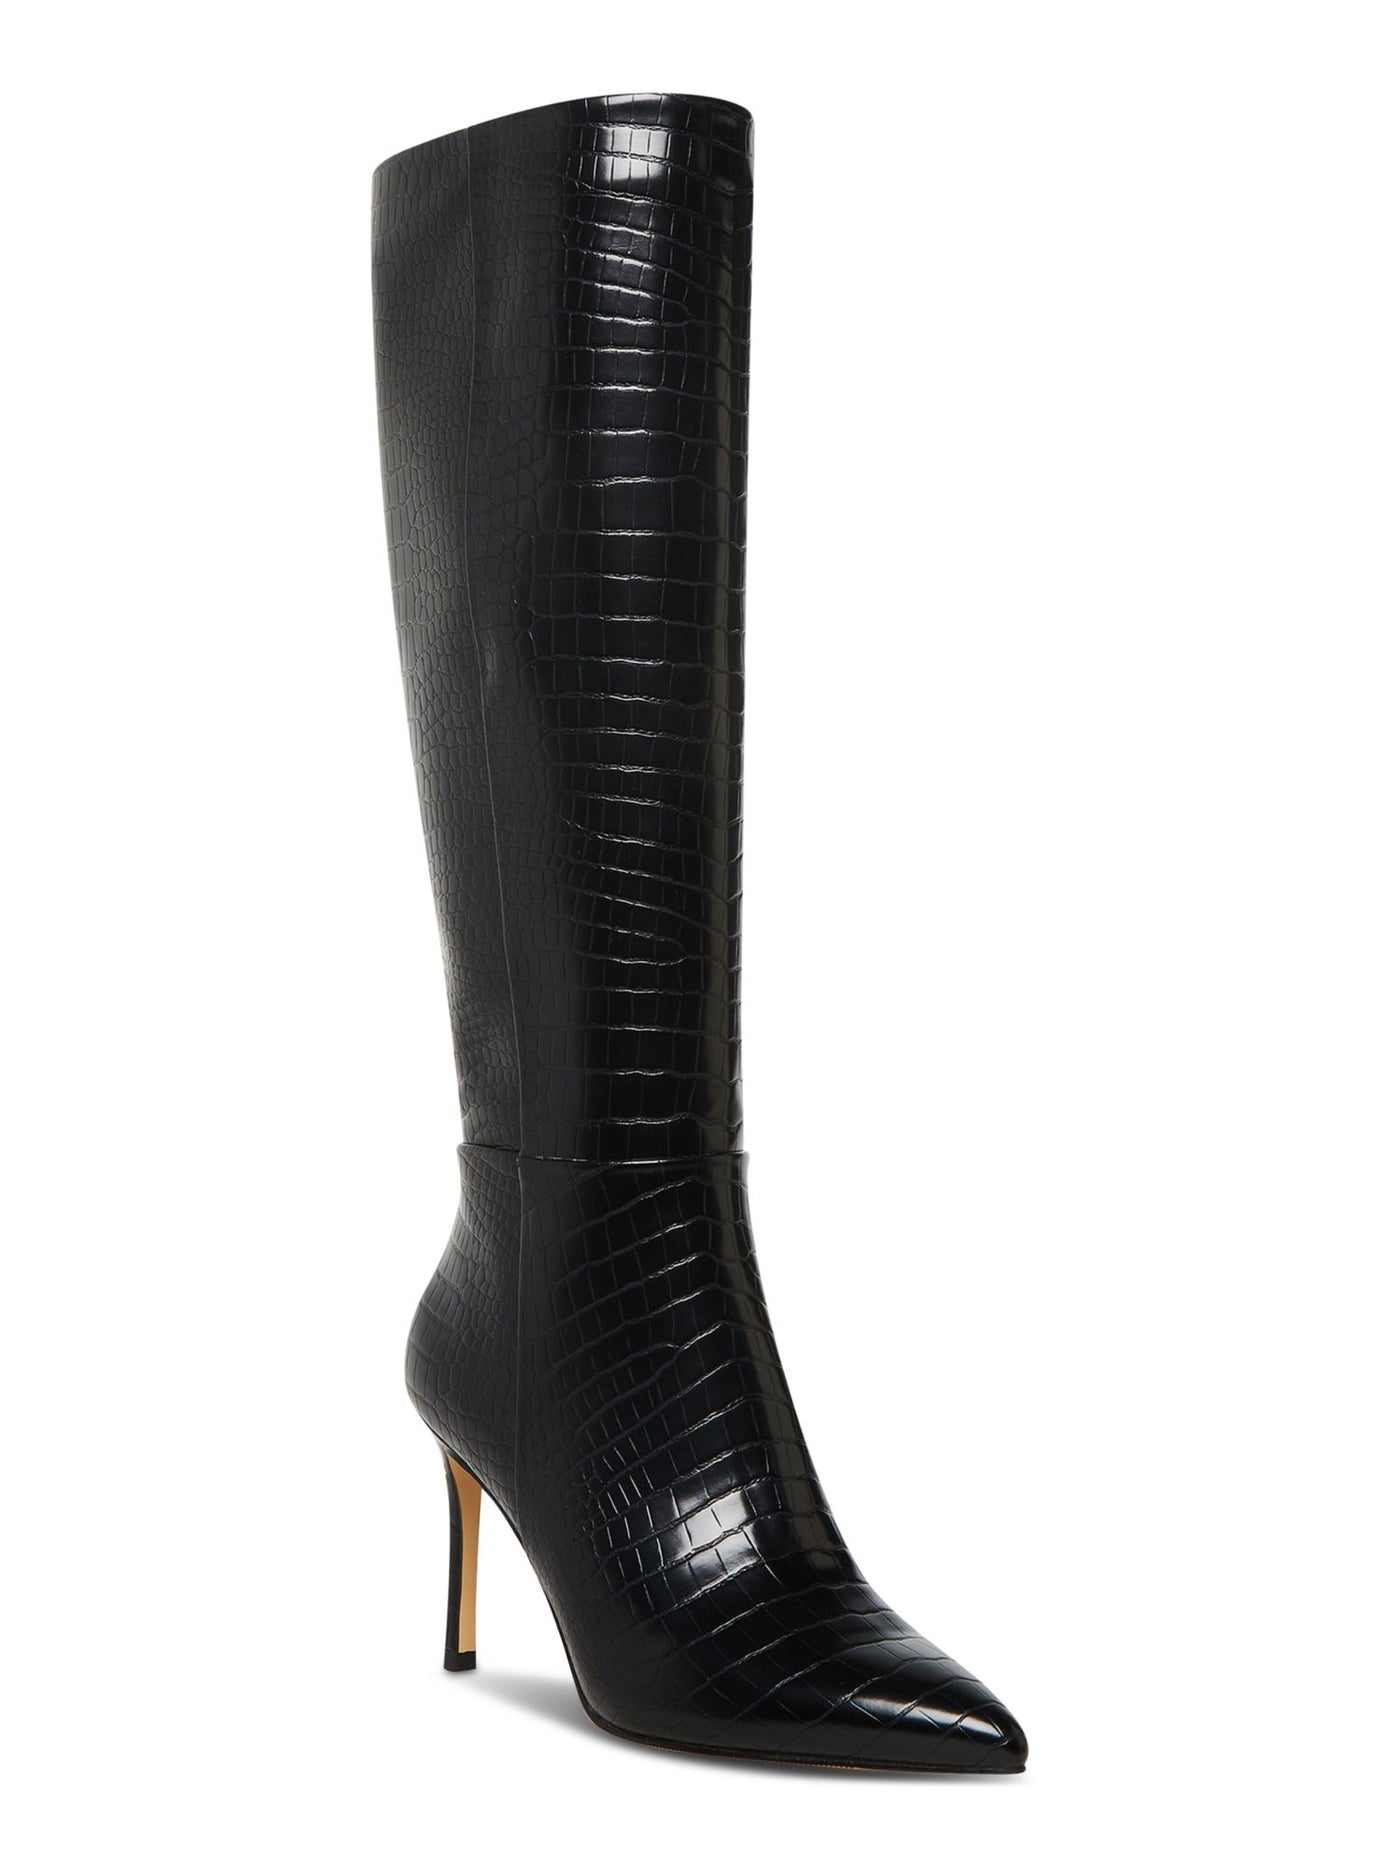 MADDEN GIRL Womens Black Animal Print Crocodile Padded Chantelle Pointed Toe Stiletto Zip-Up Dress Boots 7 M